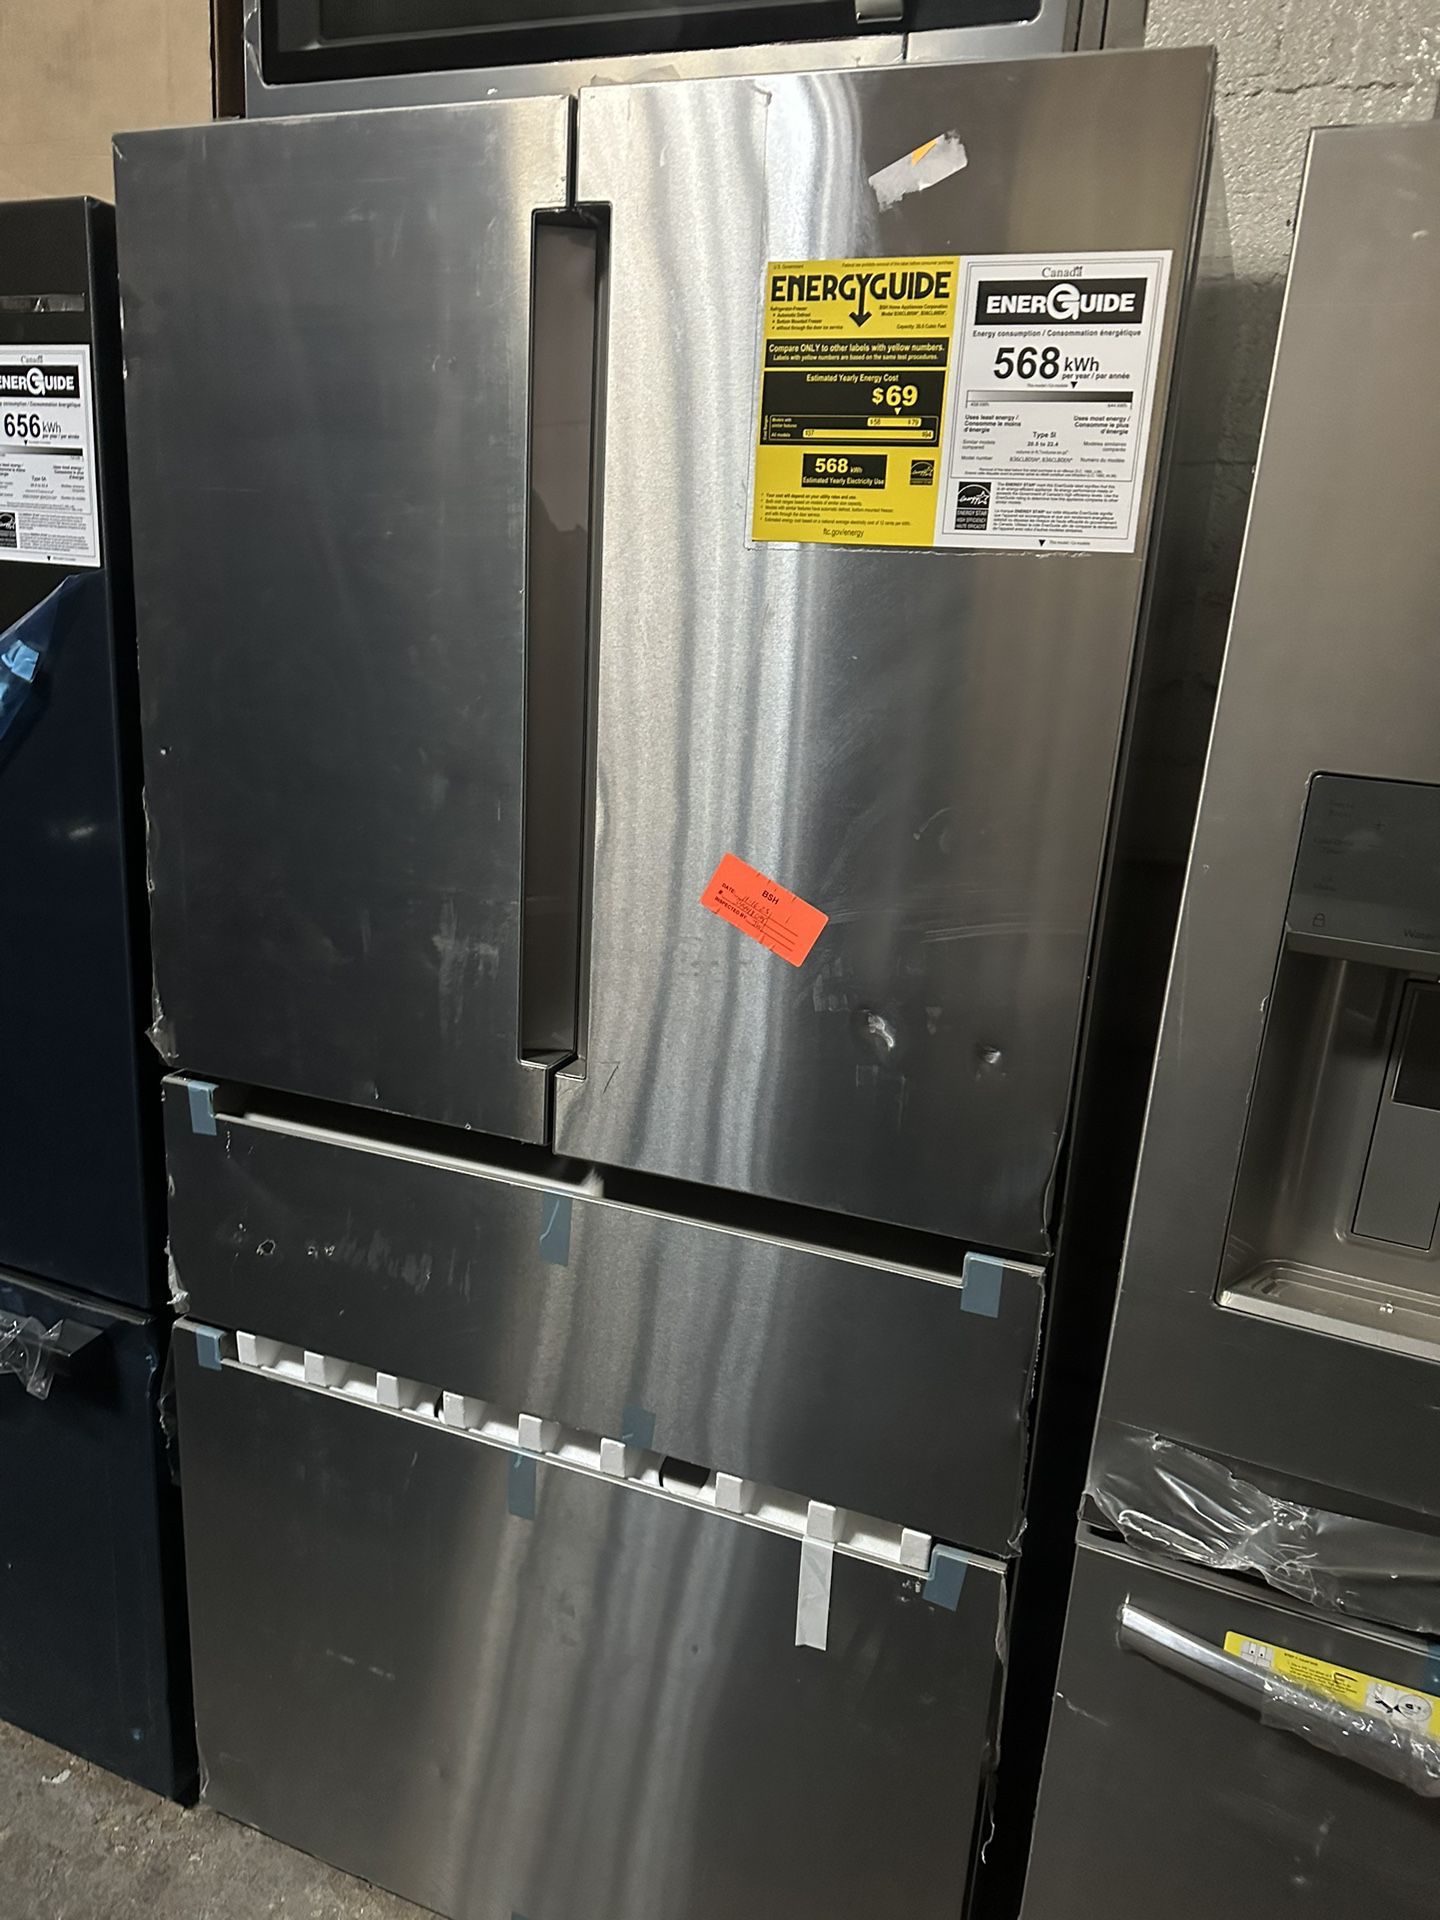 bosch refrigerator new 36!width